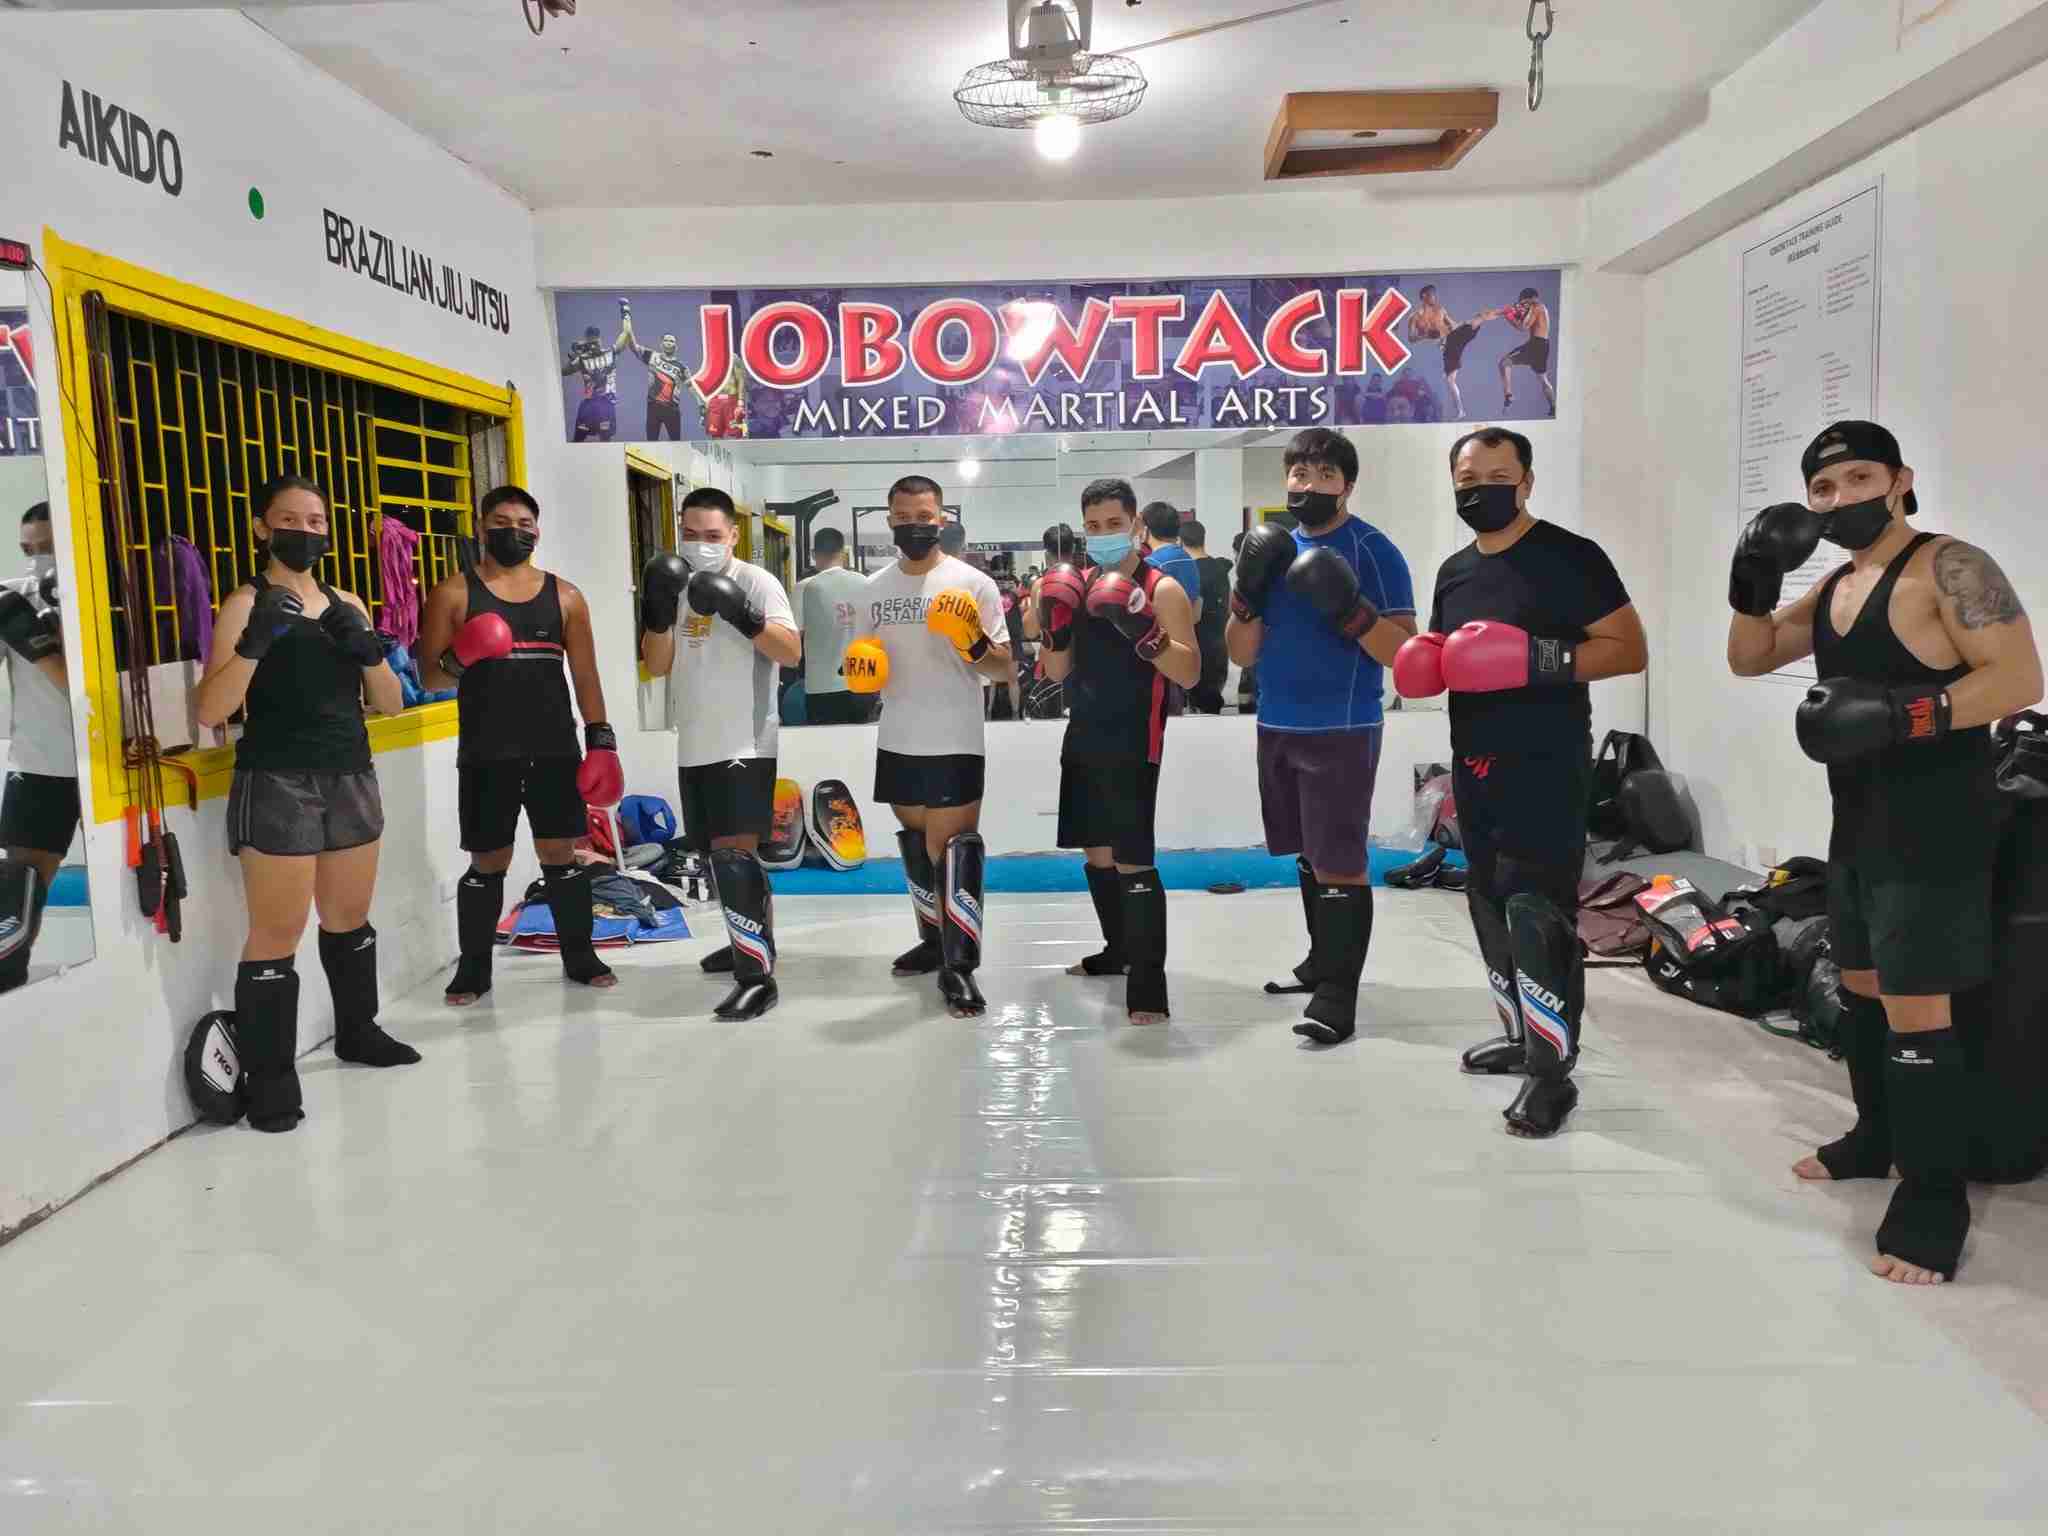 Jobowtack Fitness and MMA Sports Center